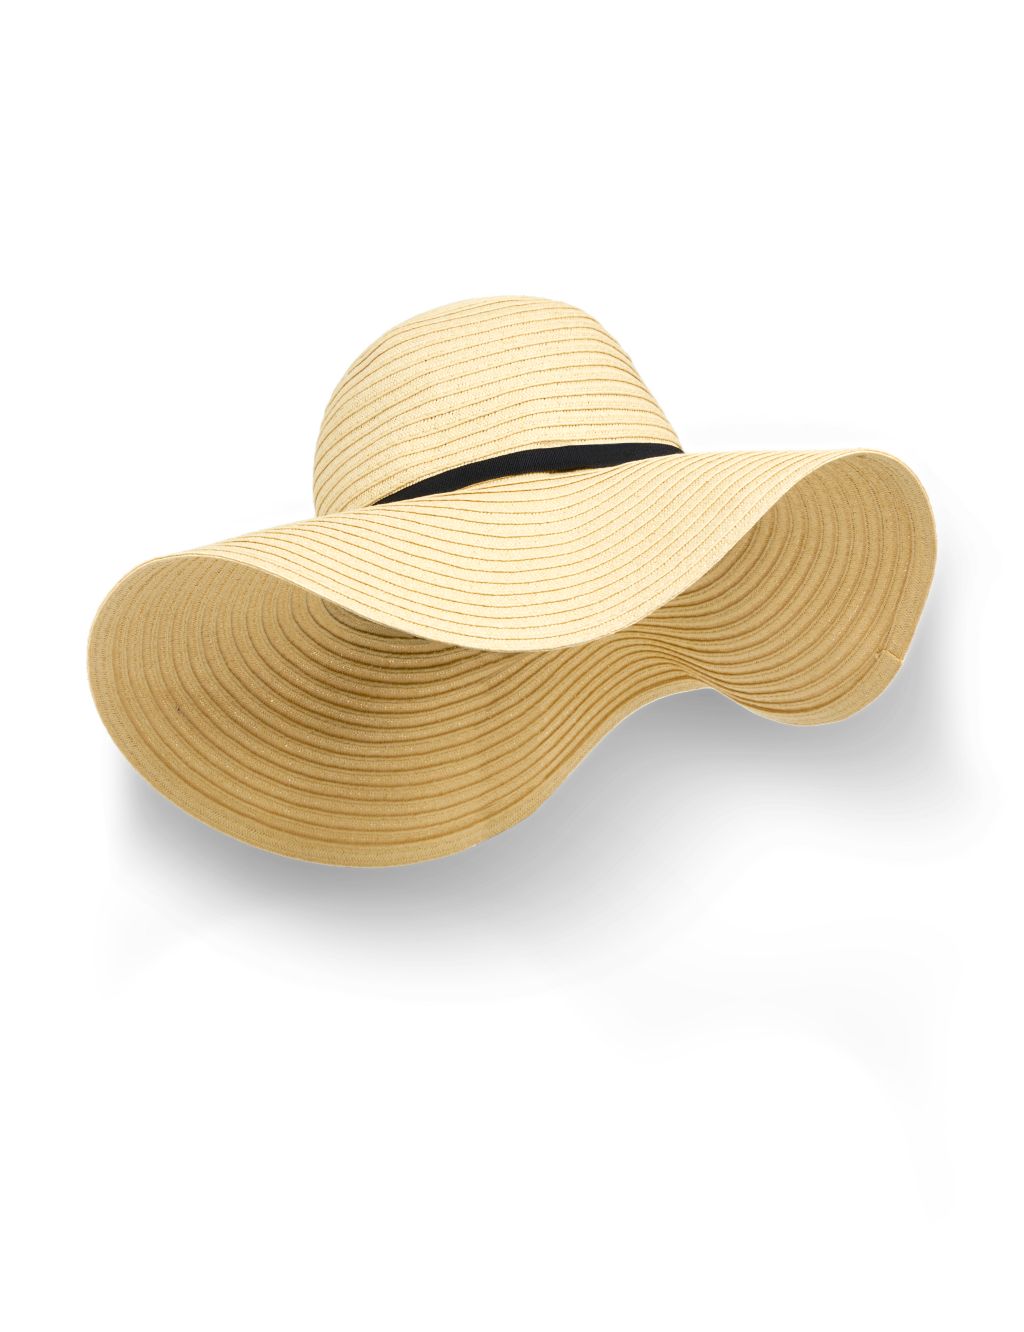 Personalised Sun Hat image 2